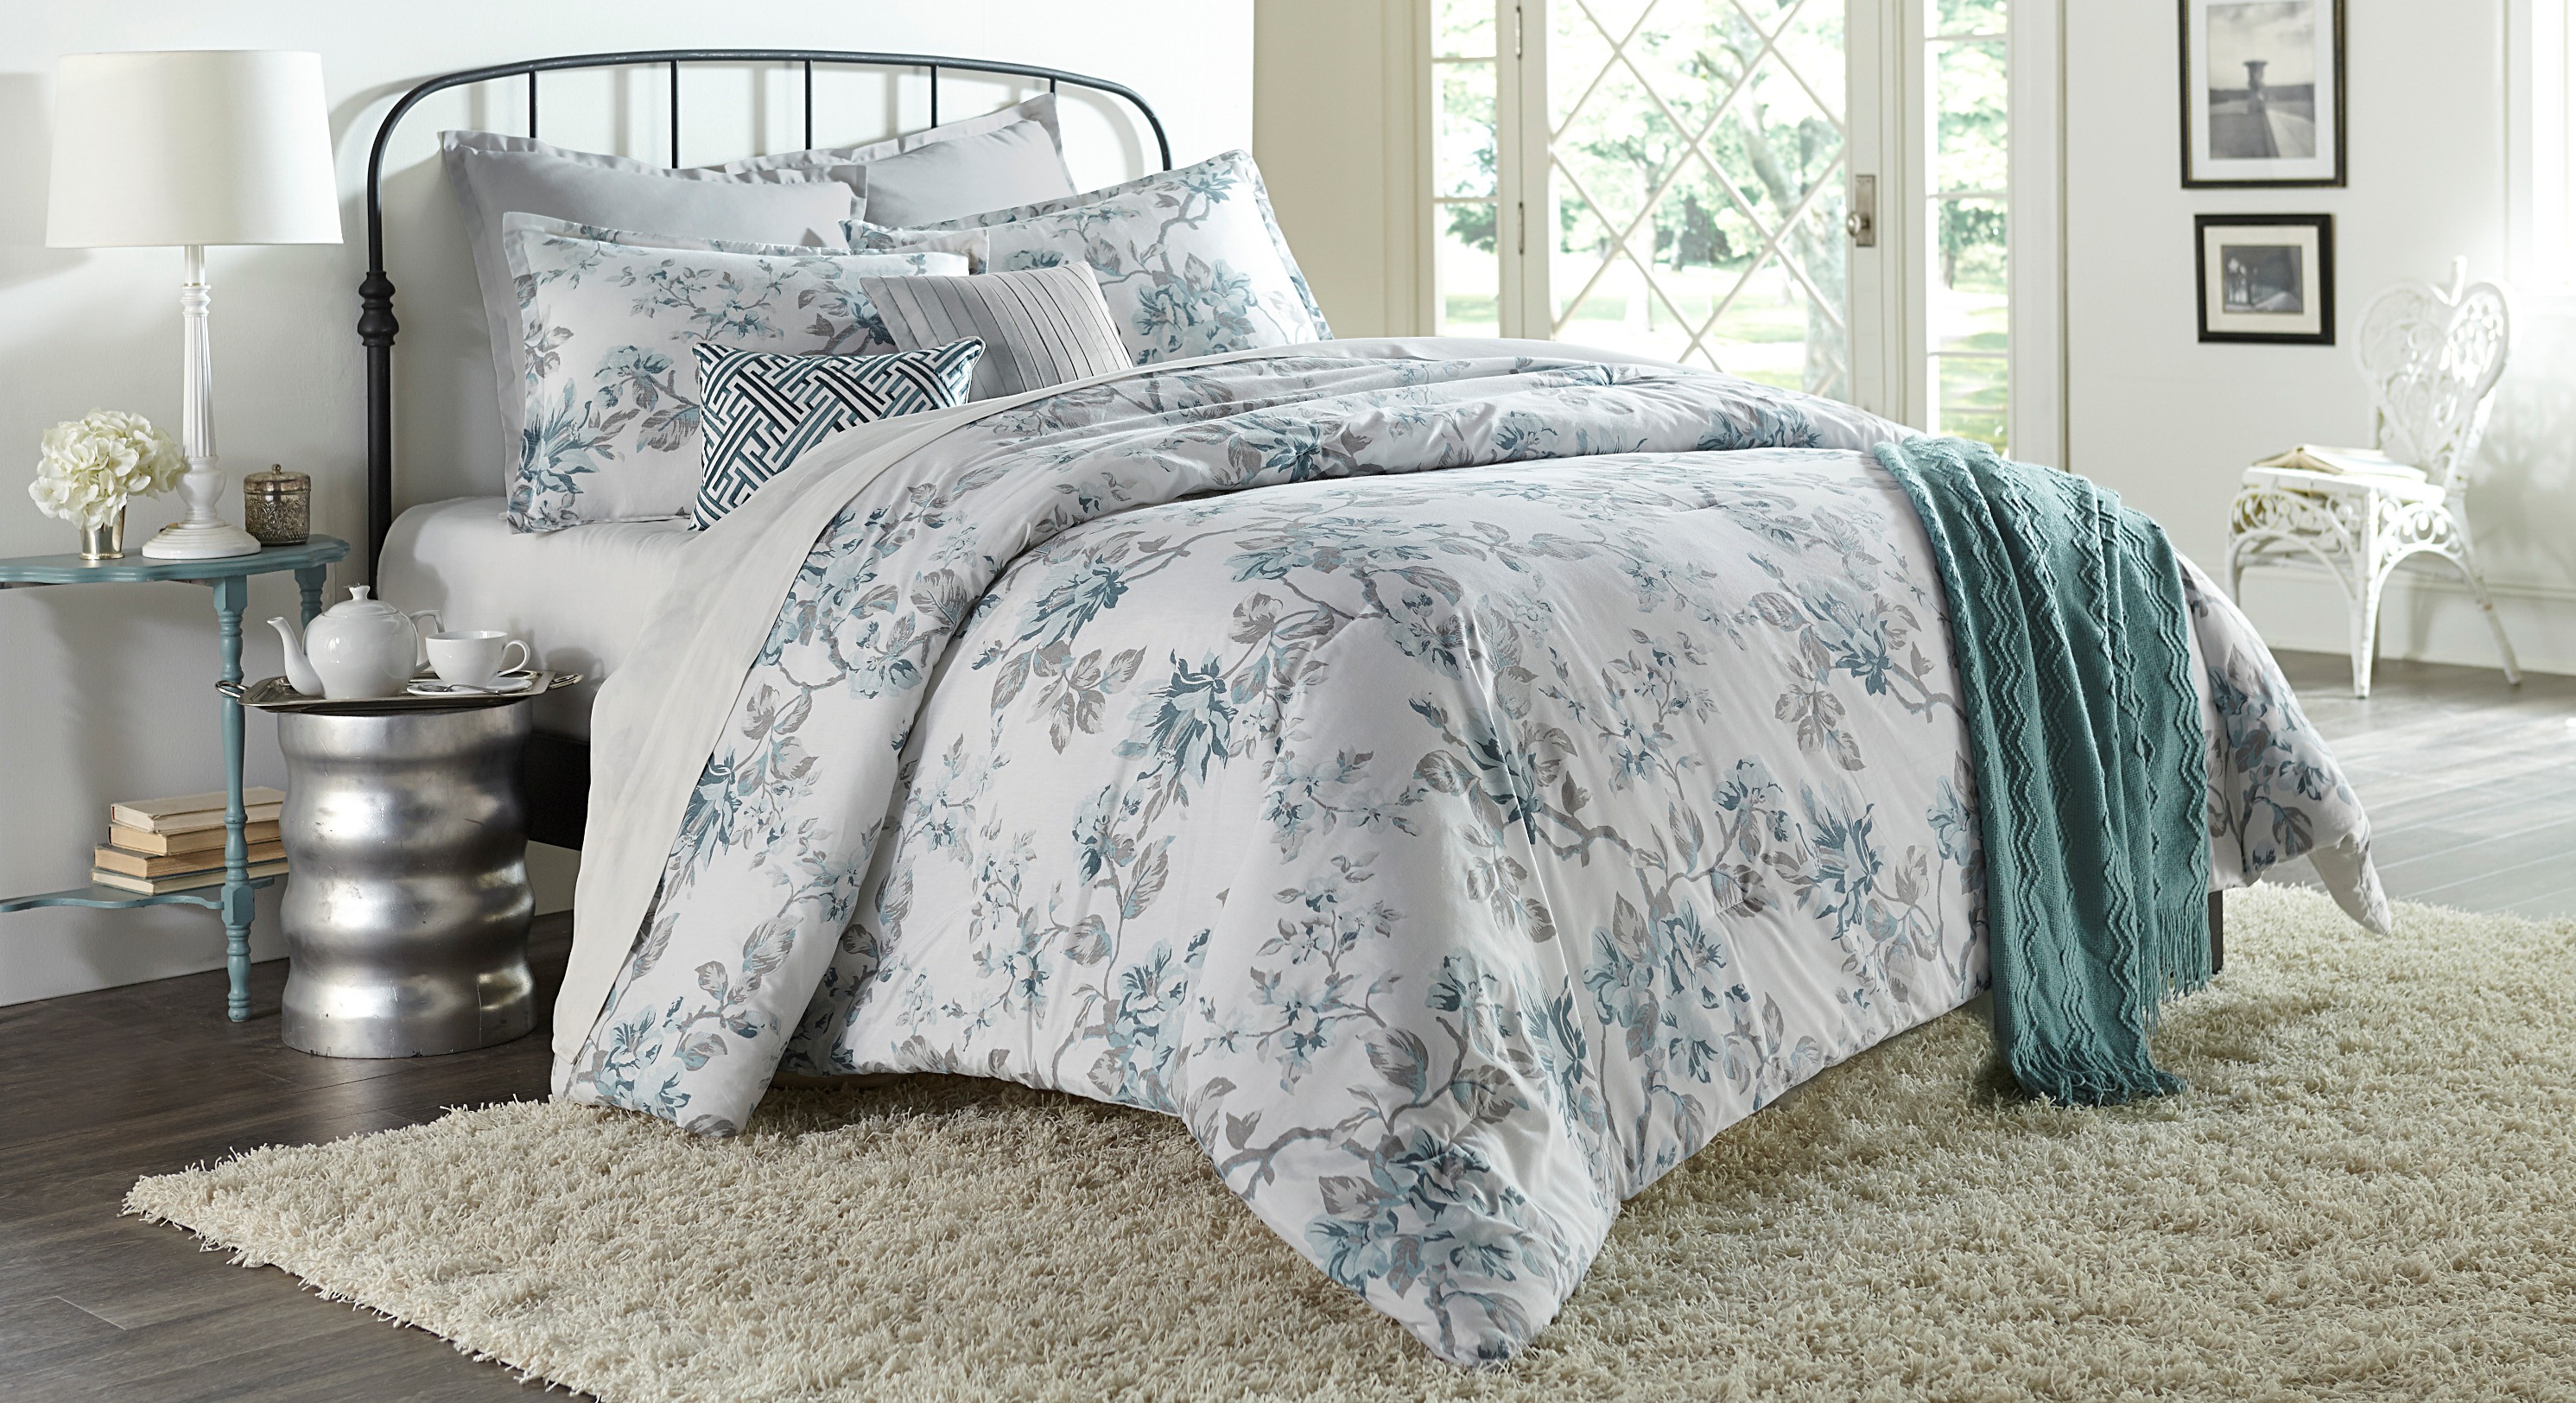 Floral Layered Comforter set